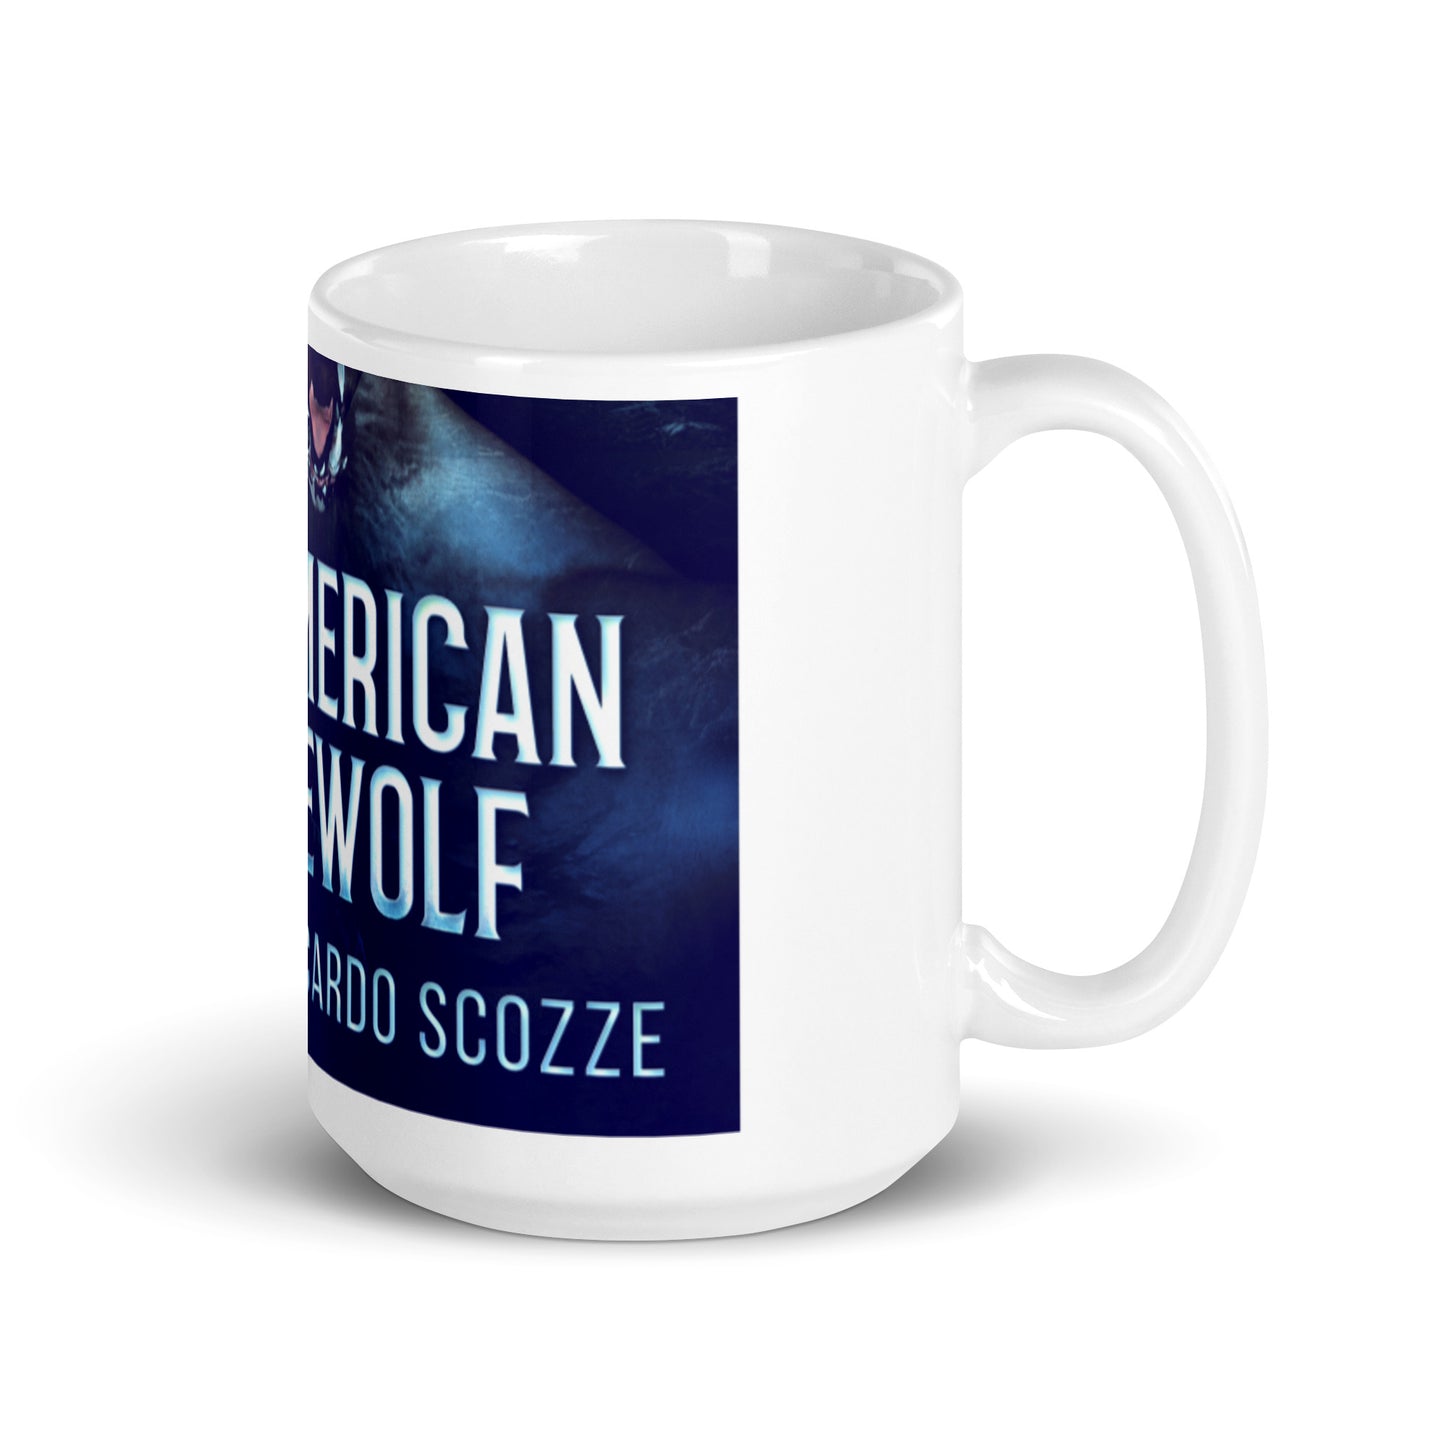 All-American Werewolf - White Coffee Mug